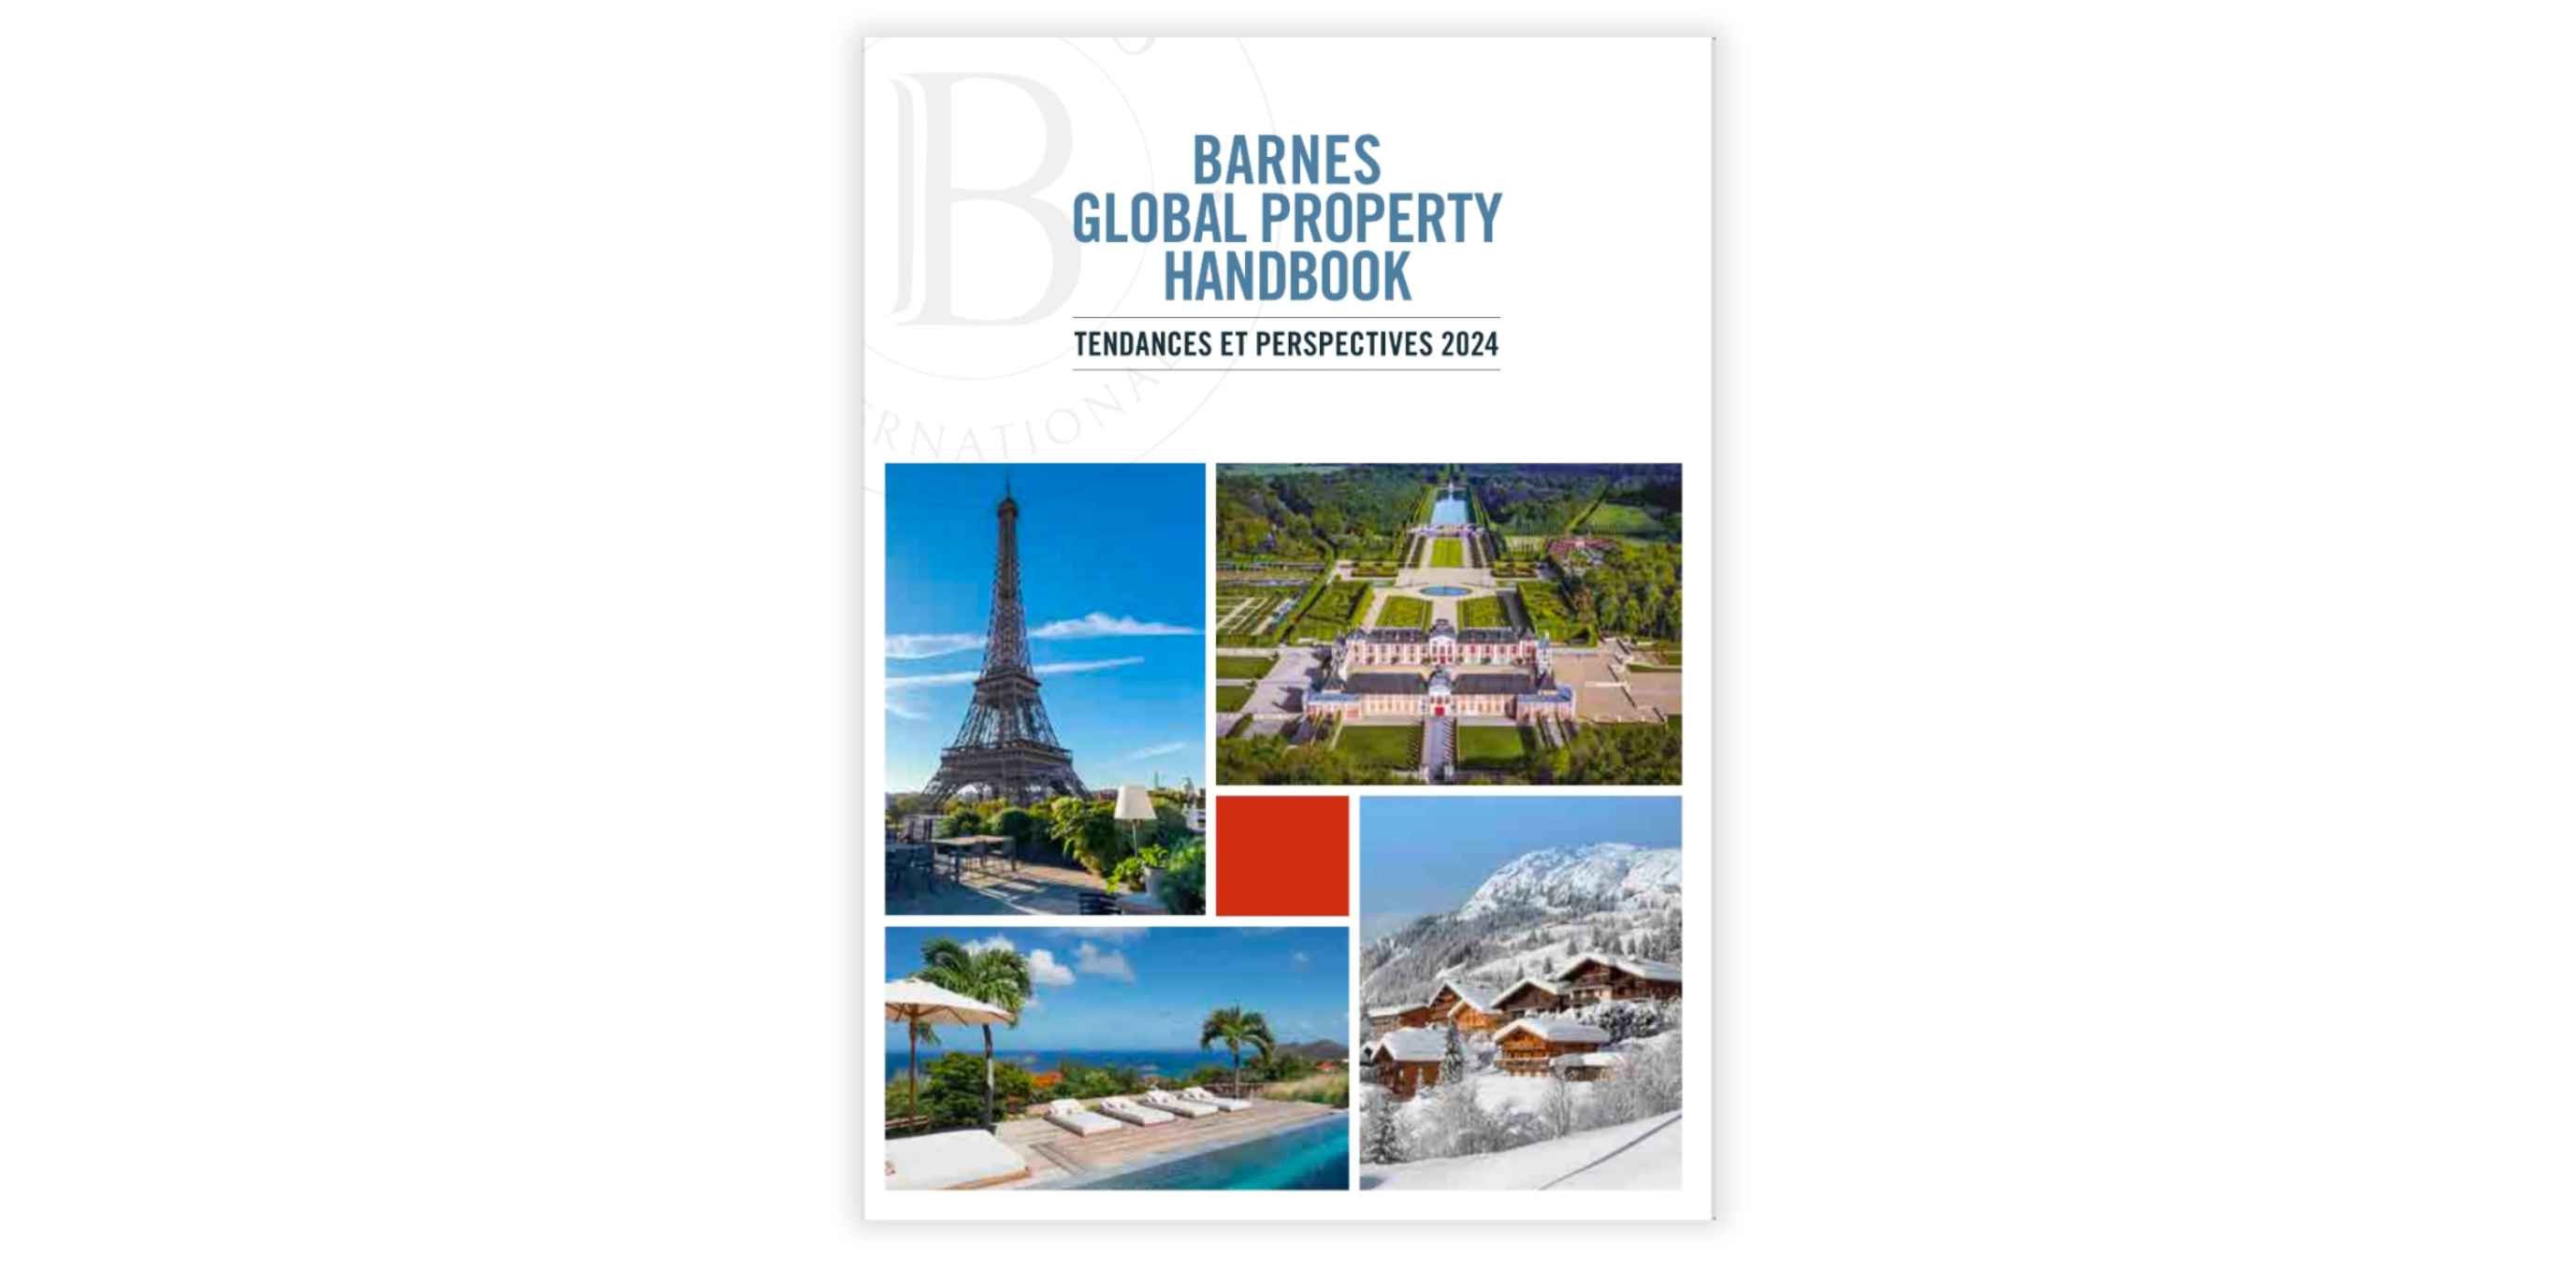 BARNES Global Property Handbook 2024 